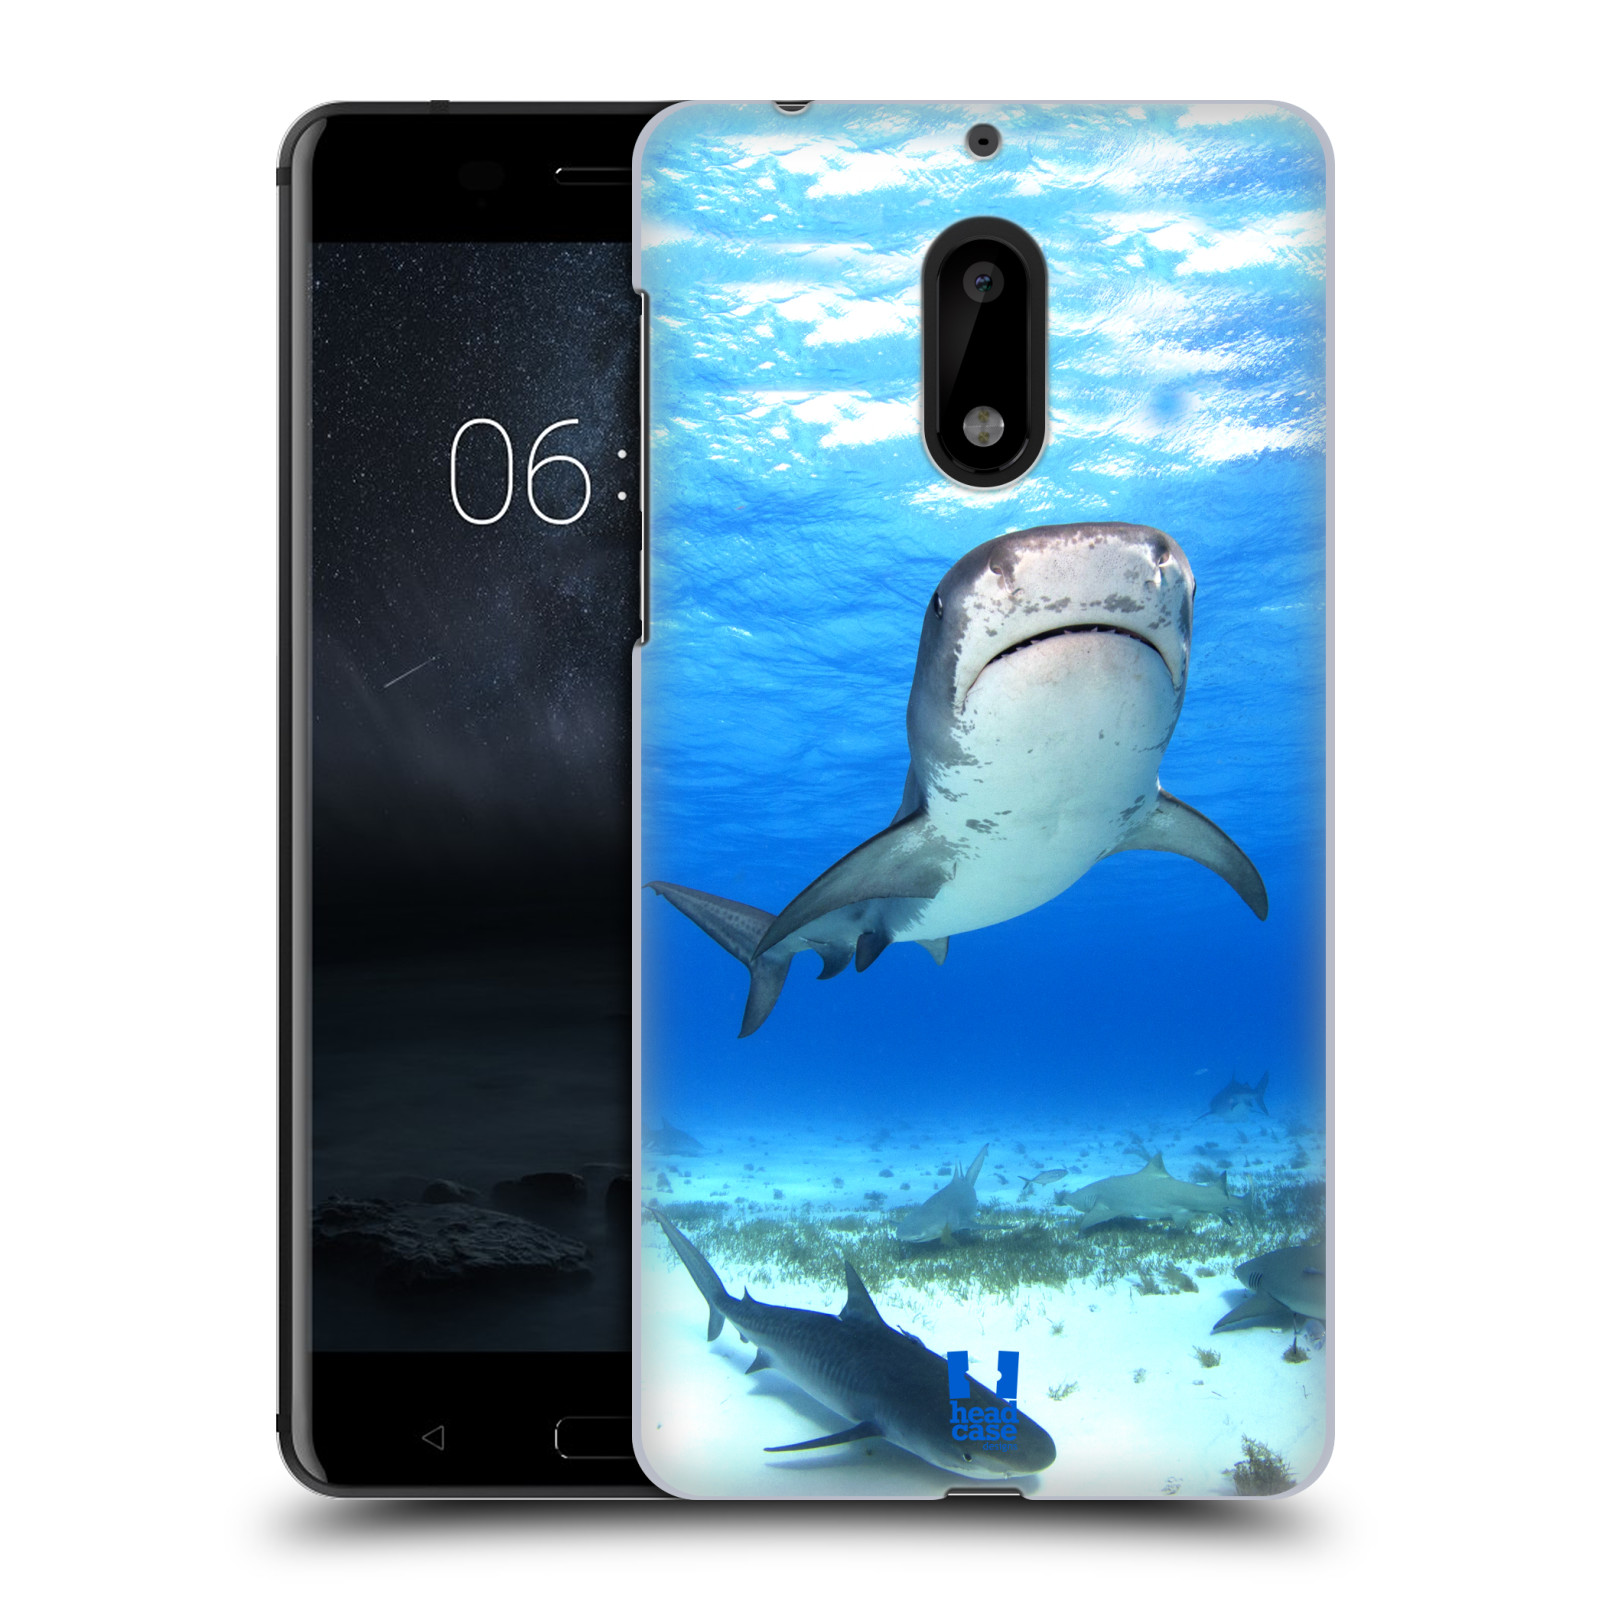 HEAD CASE plastový obal na mobil Nokia 6 vzor slavná zvířata foto žralok tygří